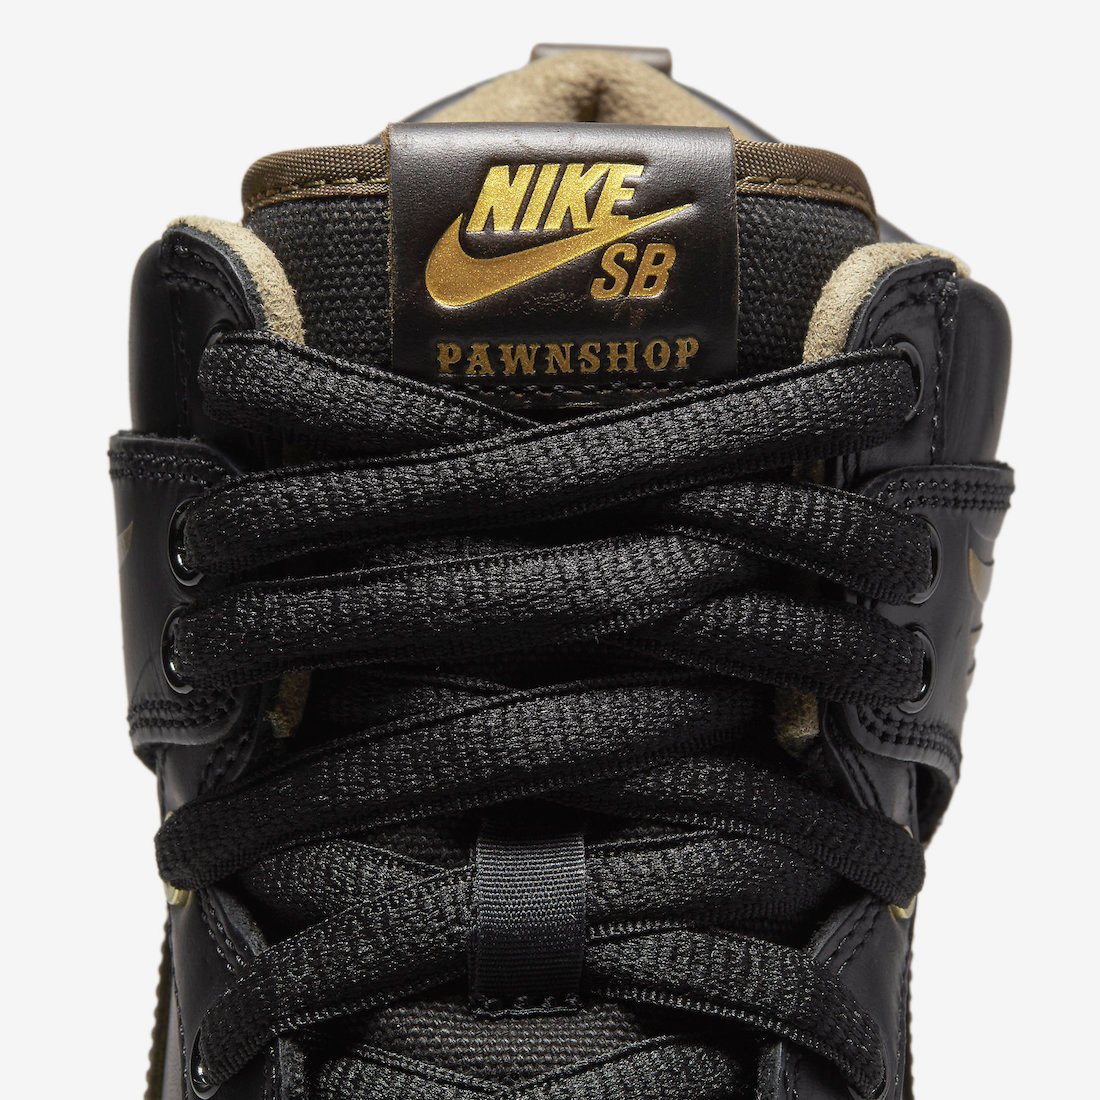 Pawnshop Nike SB Dunk High FJ0445-001 Release Info Price